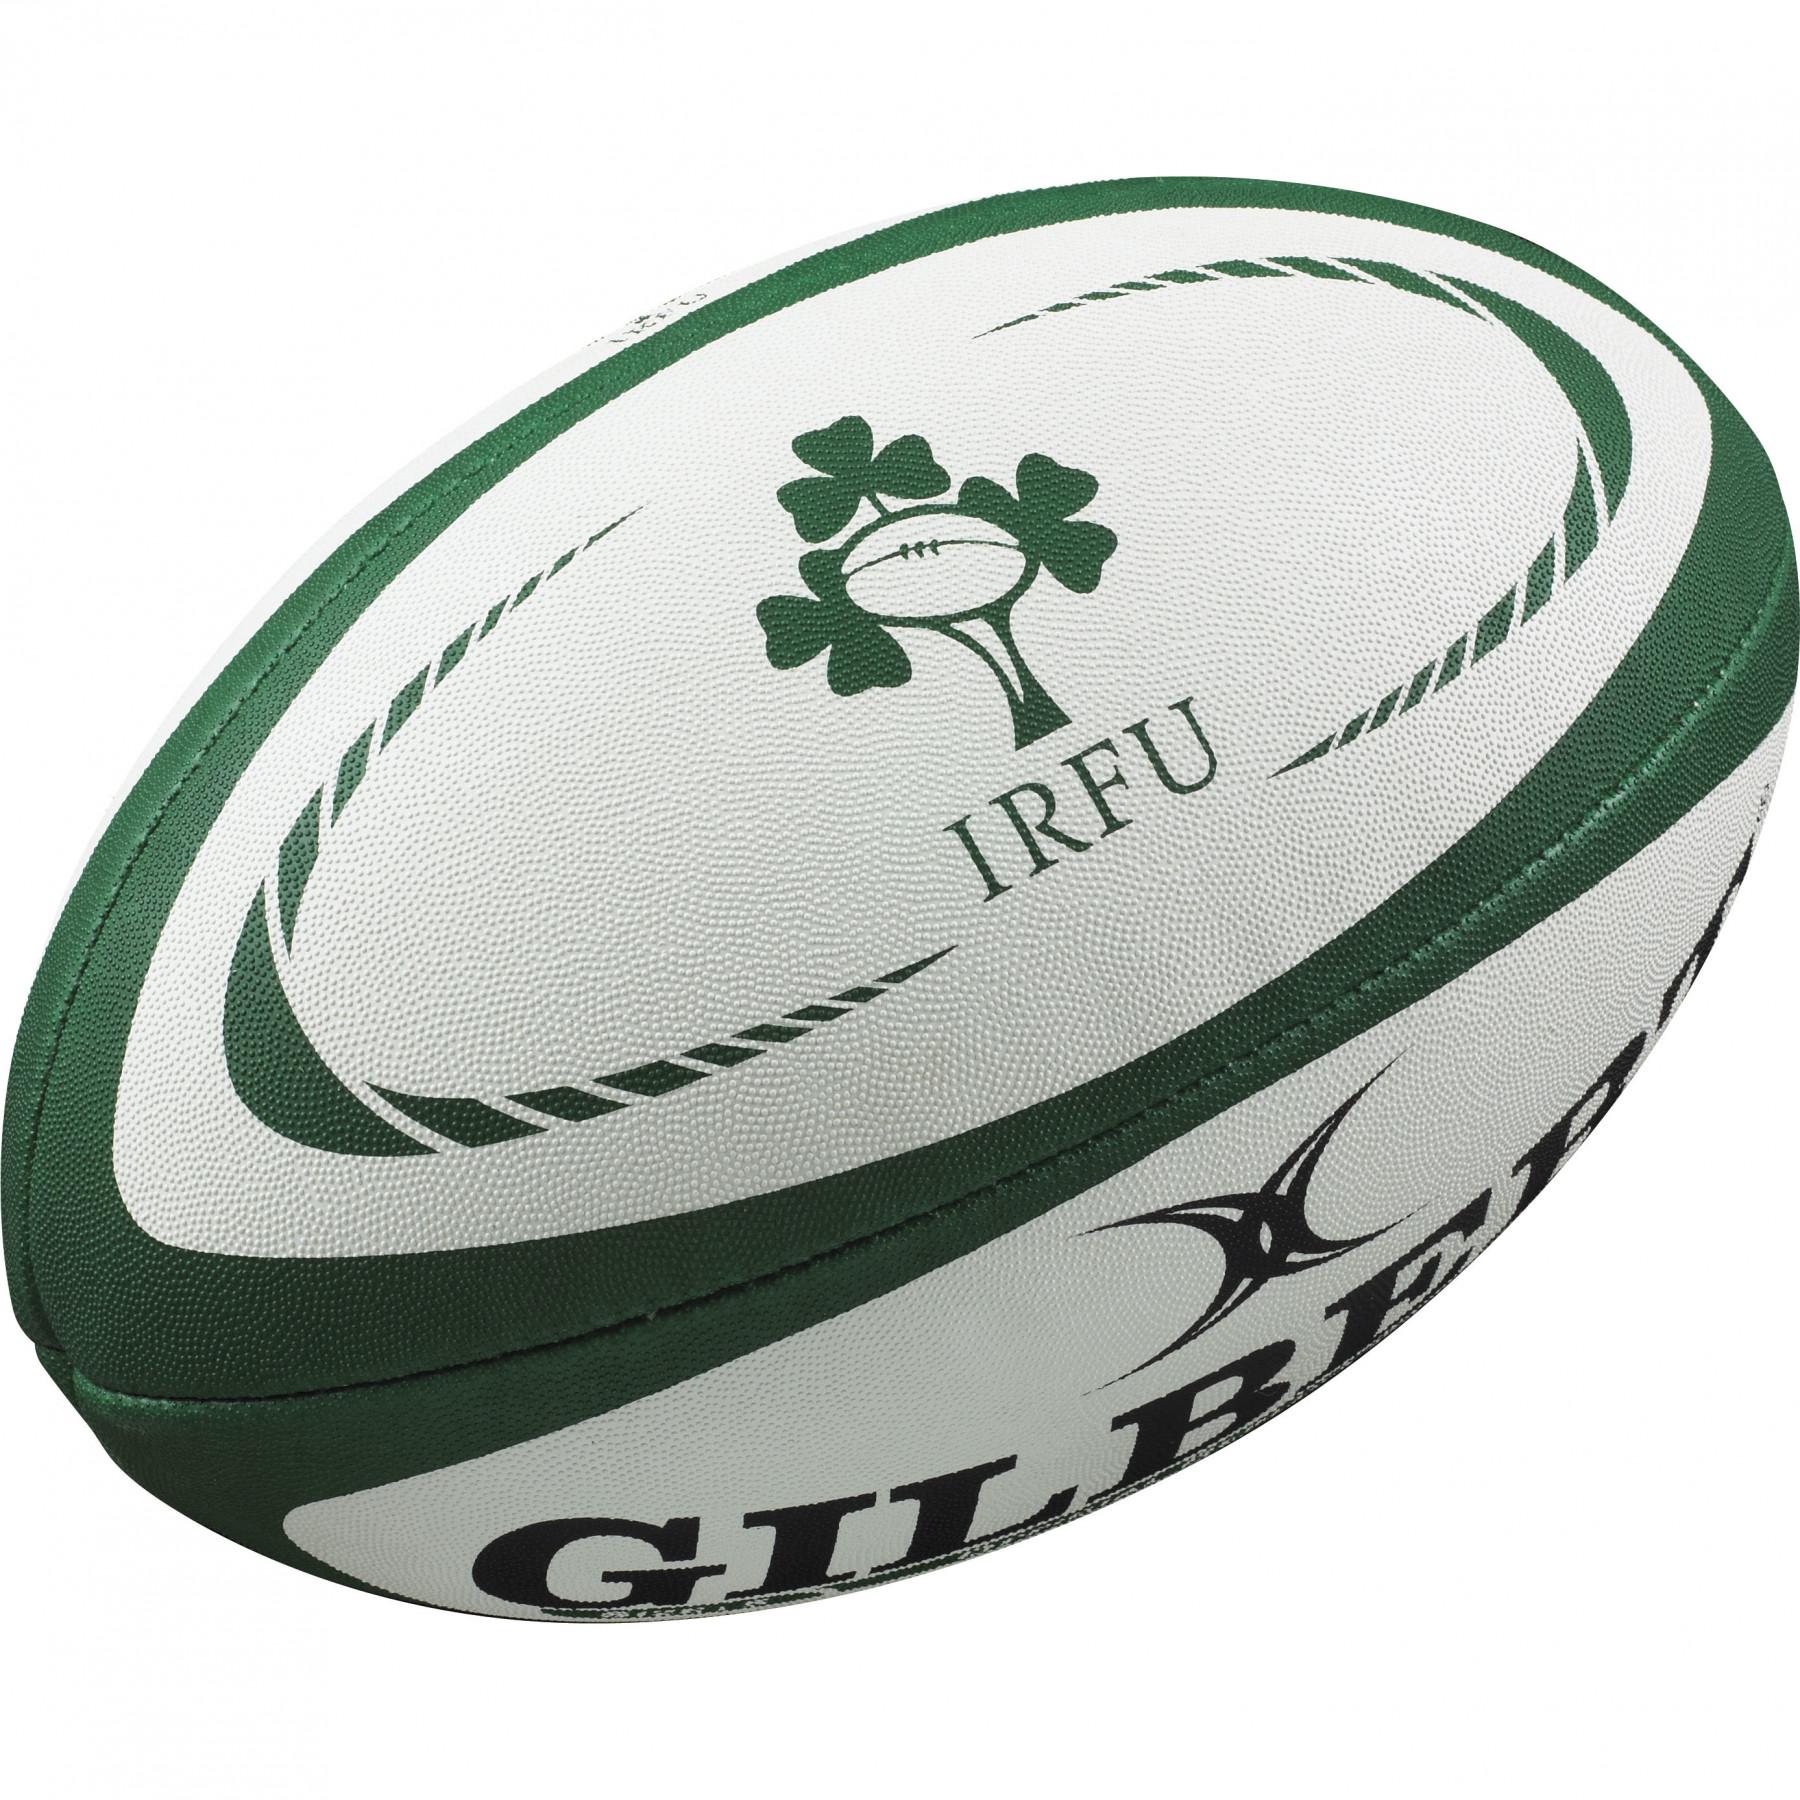 Rugbyball midi Replik Gilbert Irlande (taille 2)